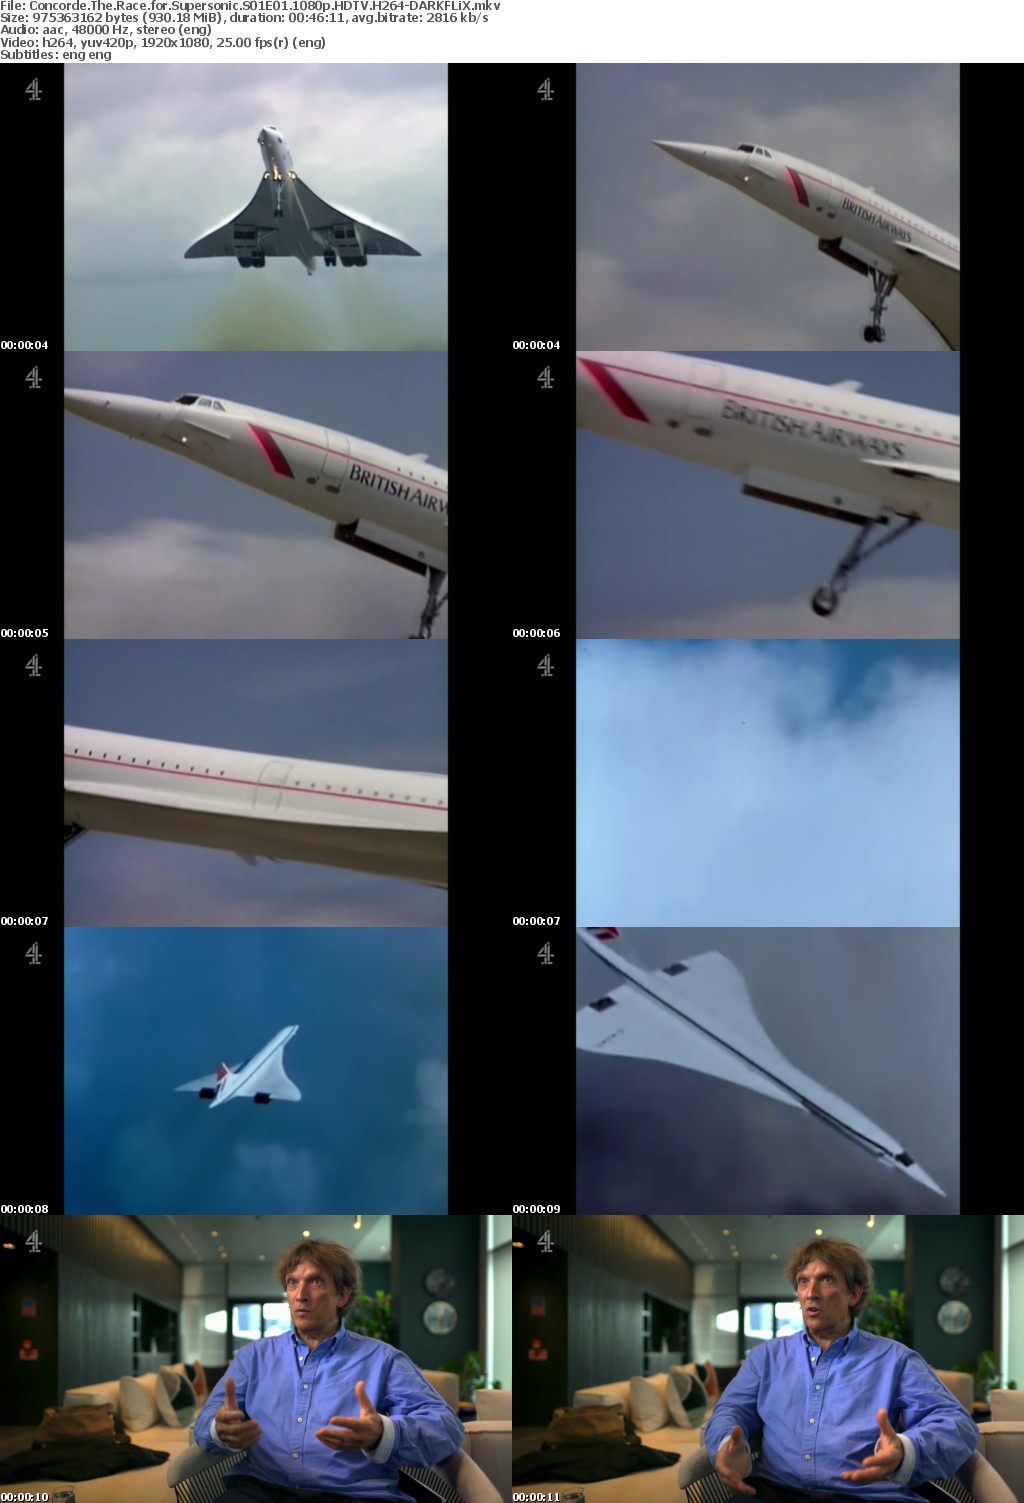 Concorde The Race for Supersonic S01E01 1080p HDTV H264-DARKFLiX